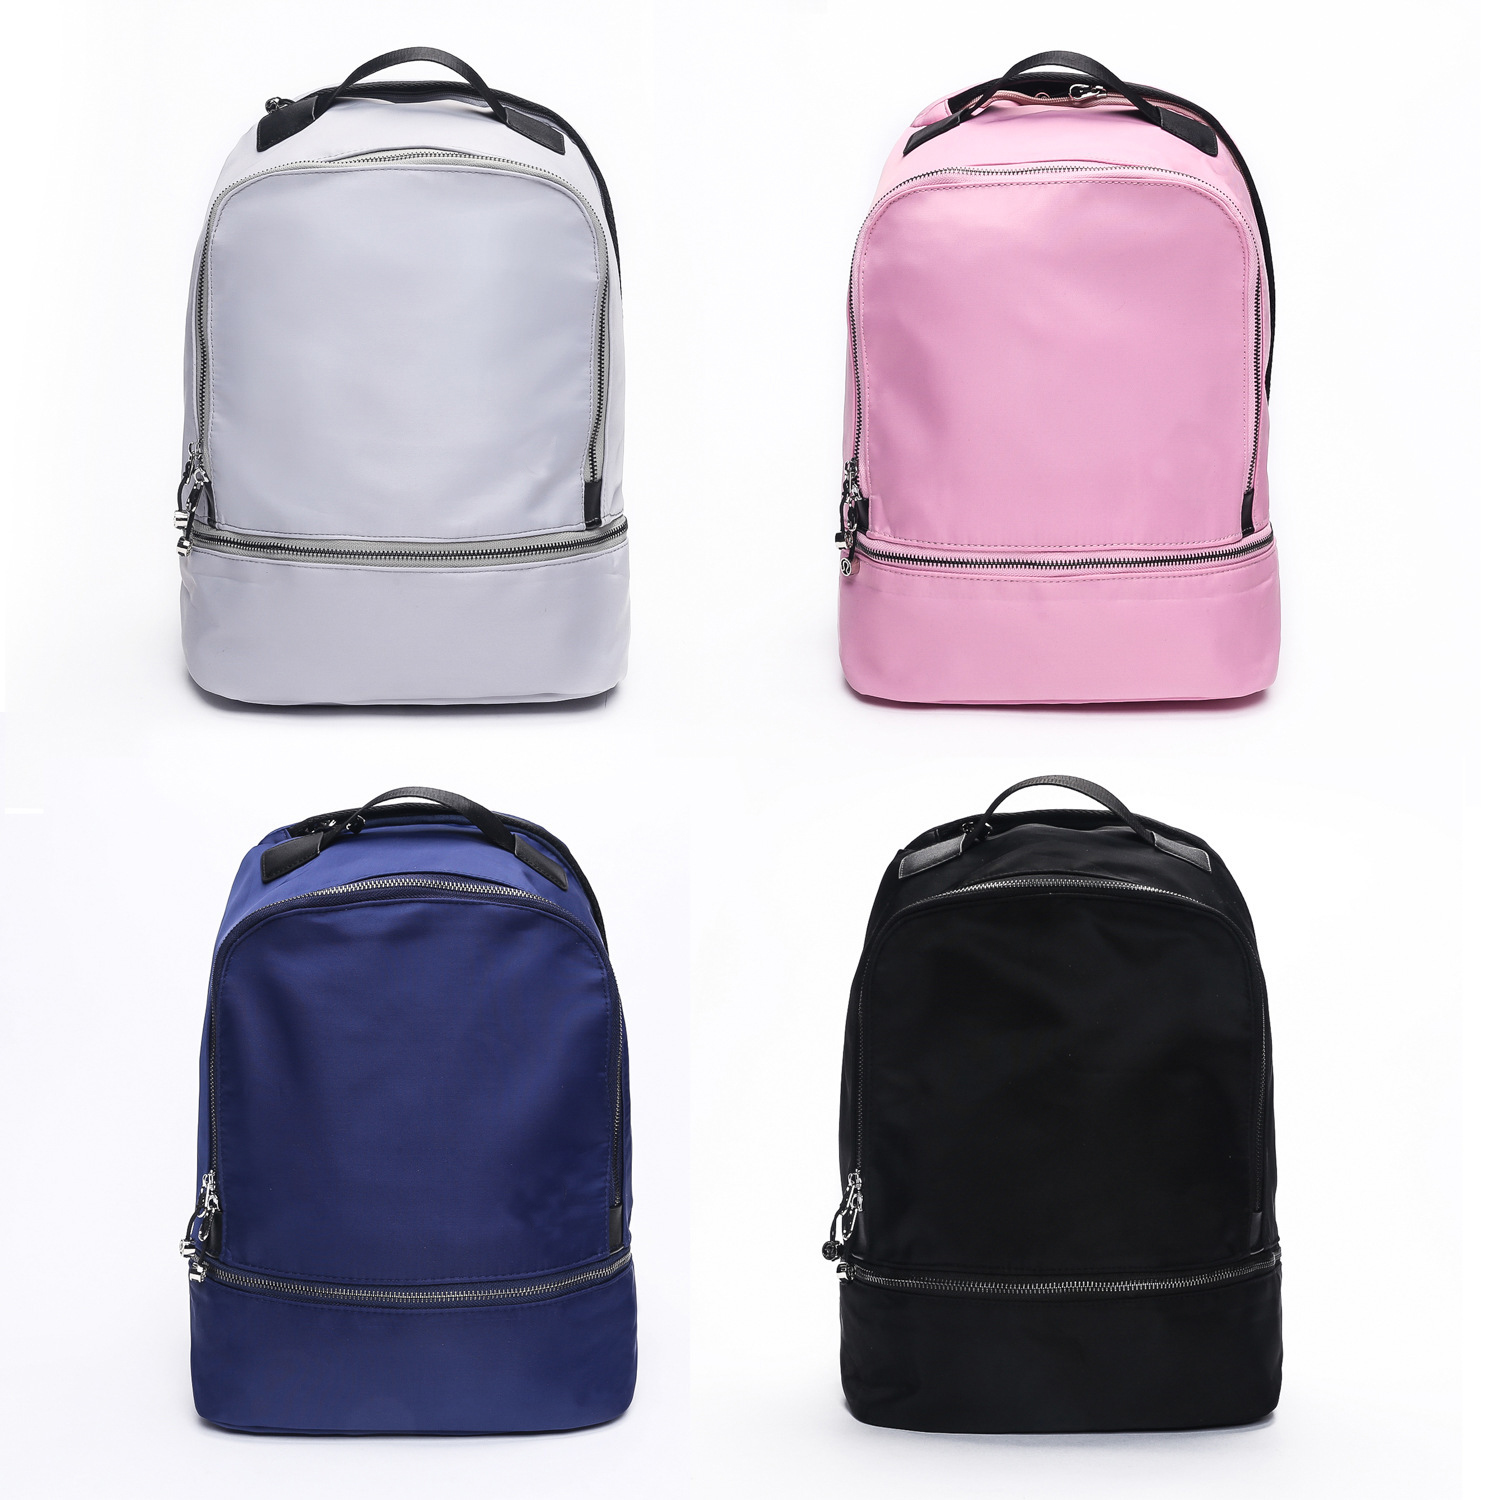 

Lulu Cross border backpack with metal zipper yoga sports high-end fashion backpack, Customize